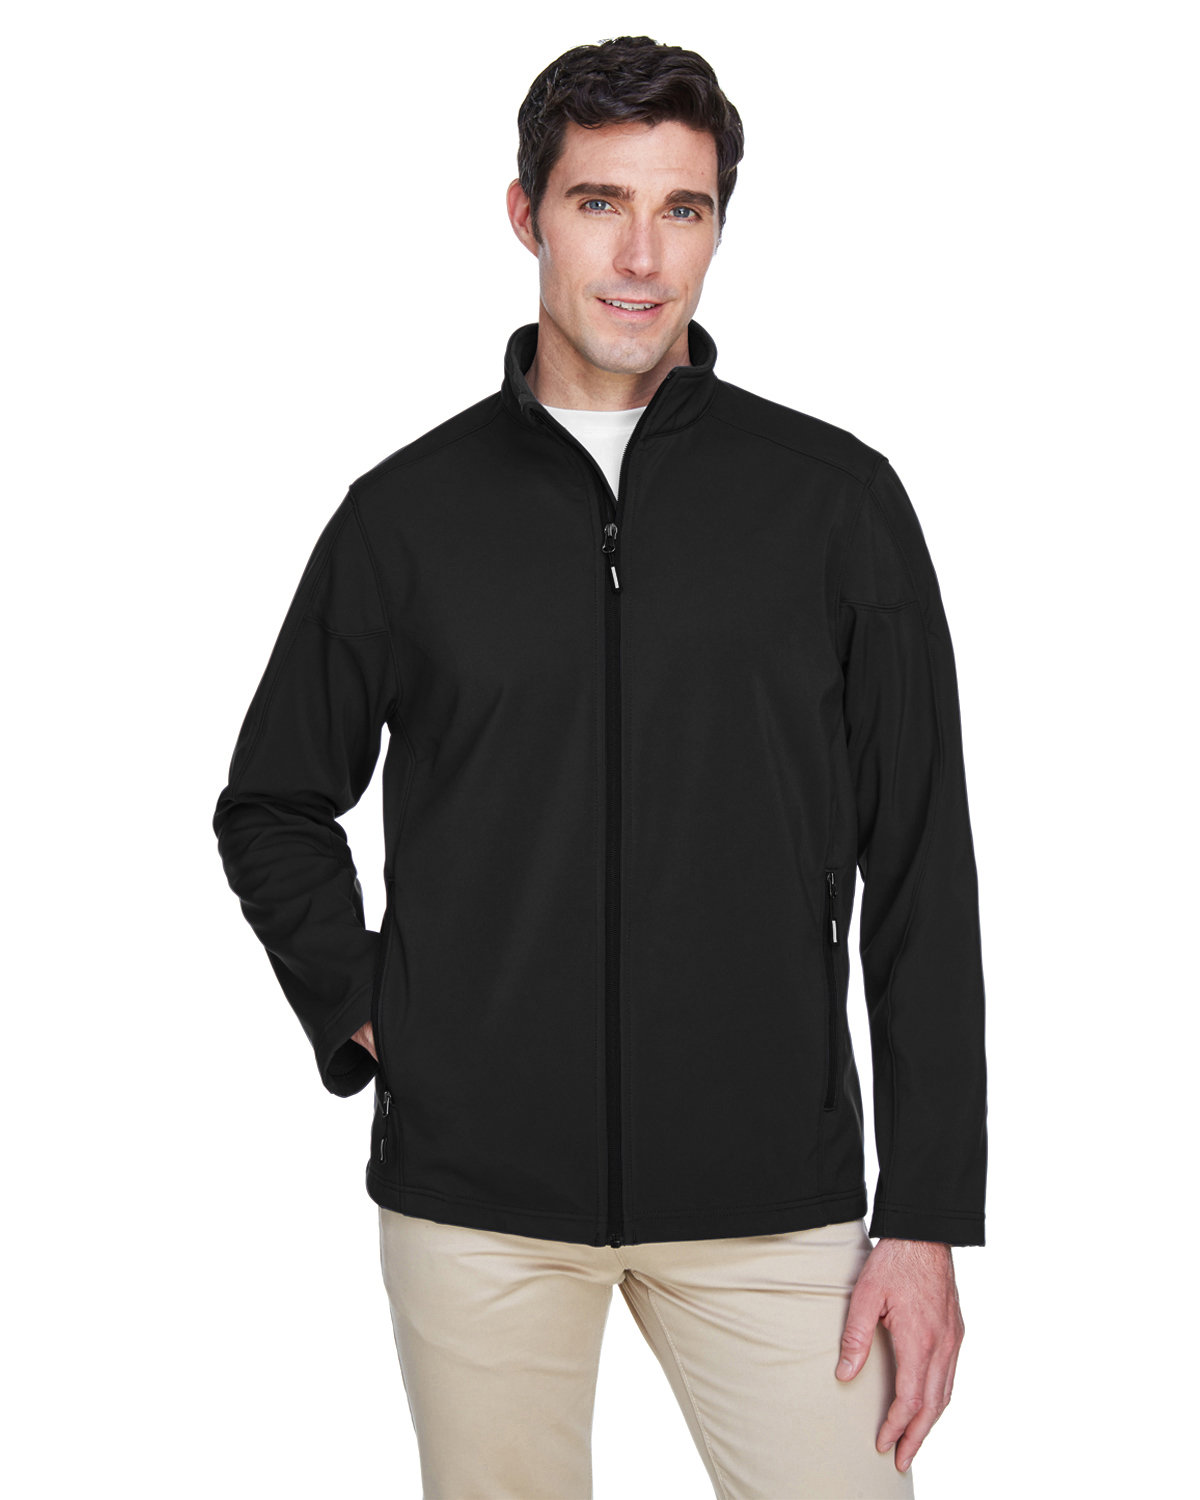 Core 365 Men's Cruise Two-Layer Fleece Bonded Soft Shell Jacket BLACK 